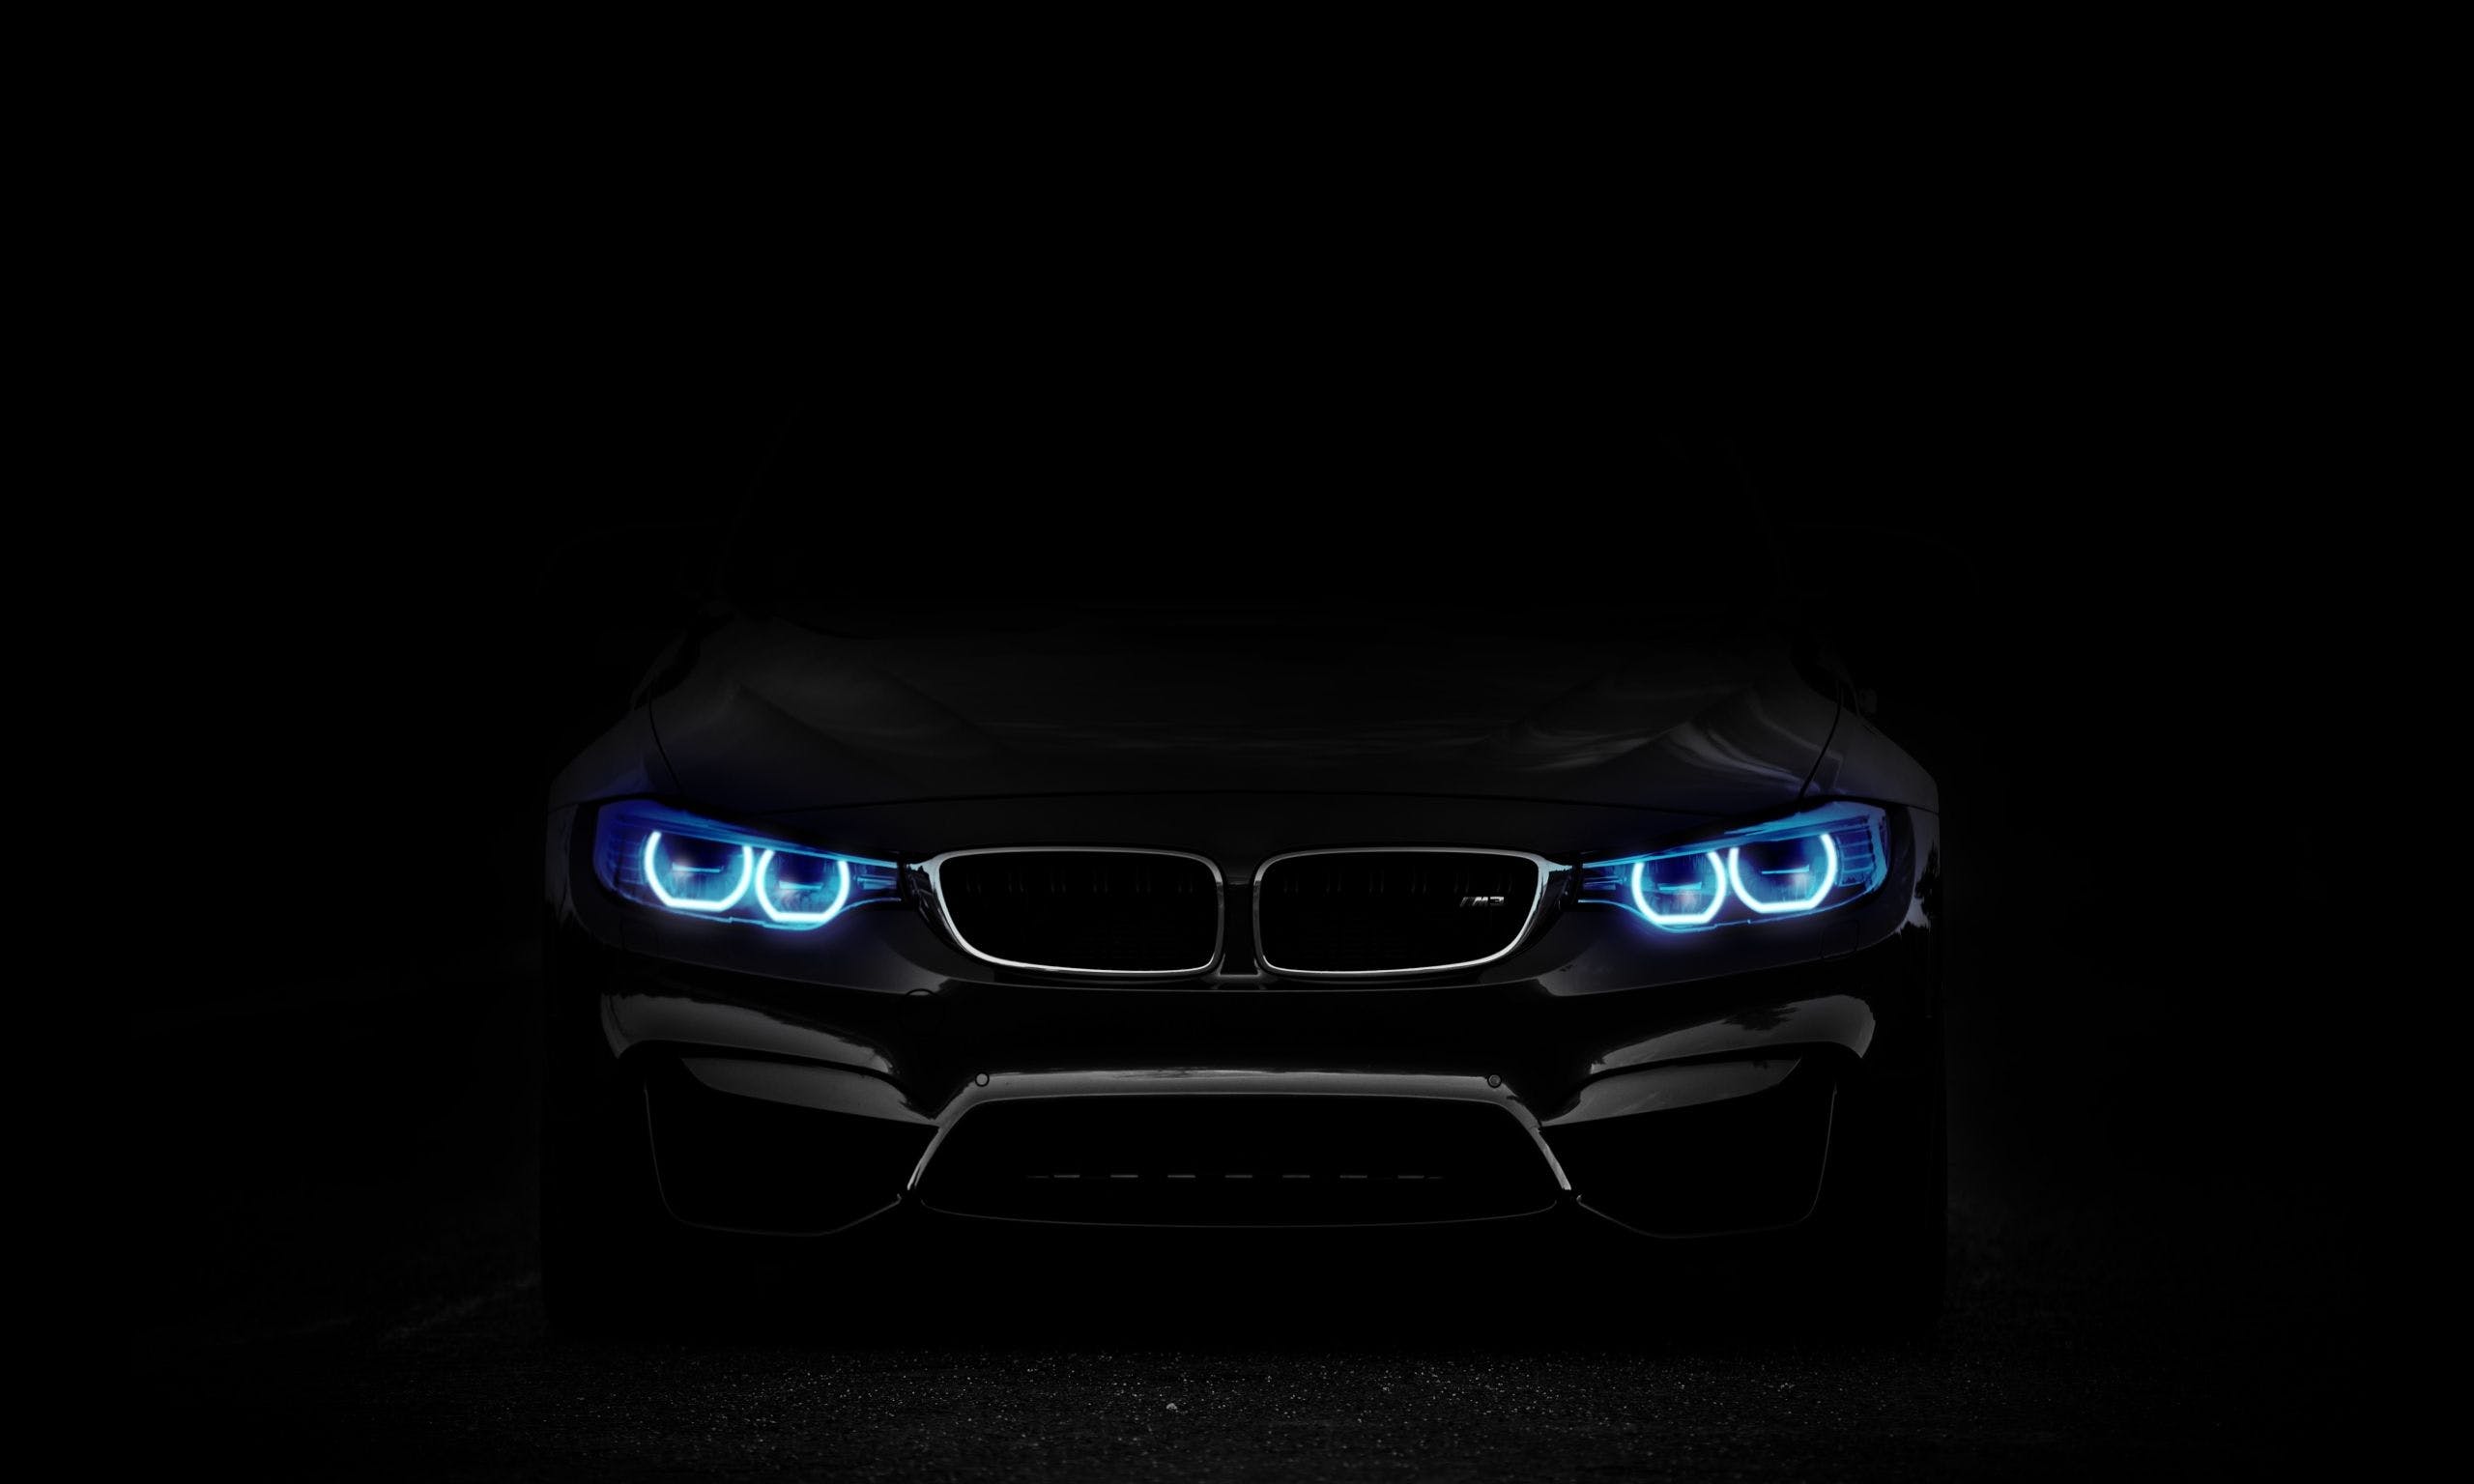 General 2560x1536 black BMW blue simple background car frontal view headlights black background vehicle minimalism